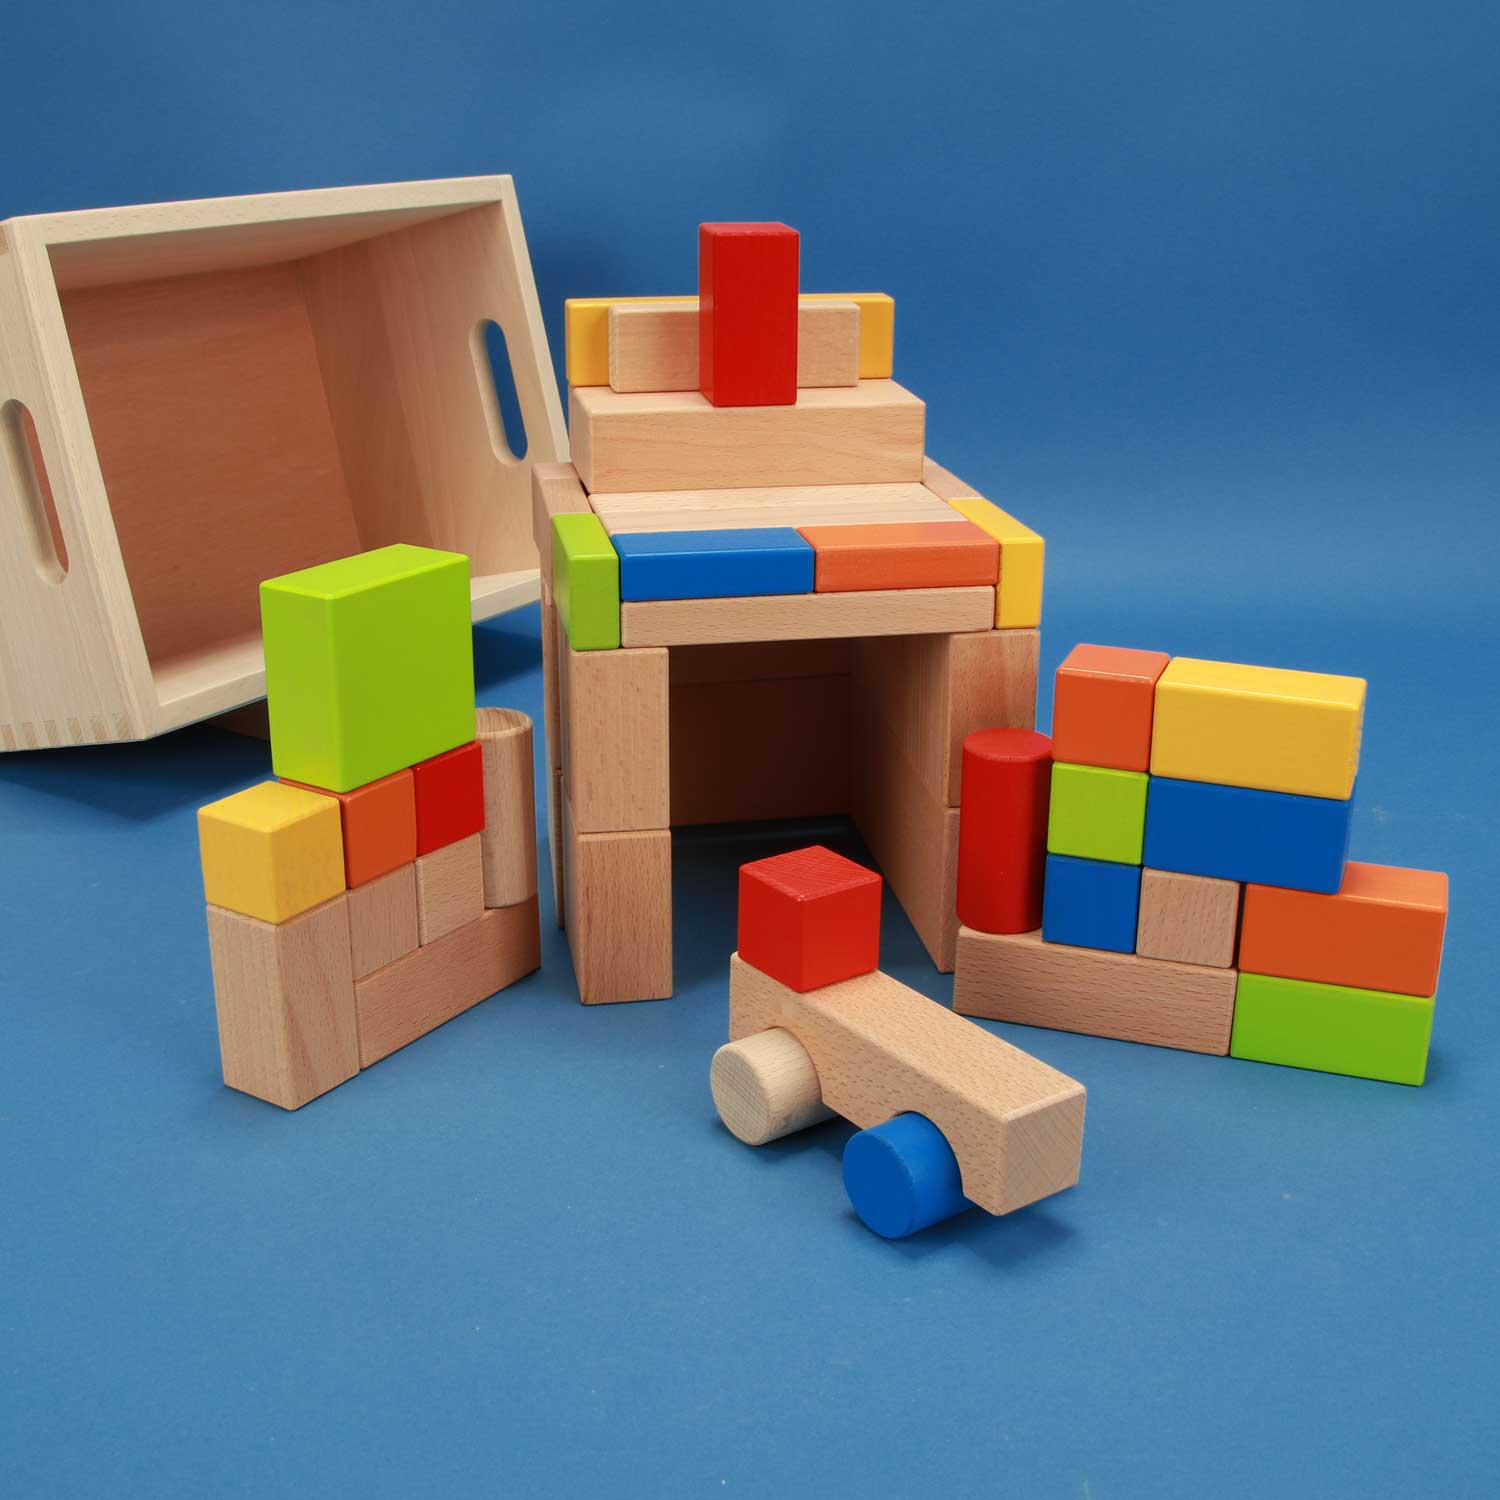 Sets of wooden building blocks